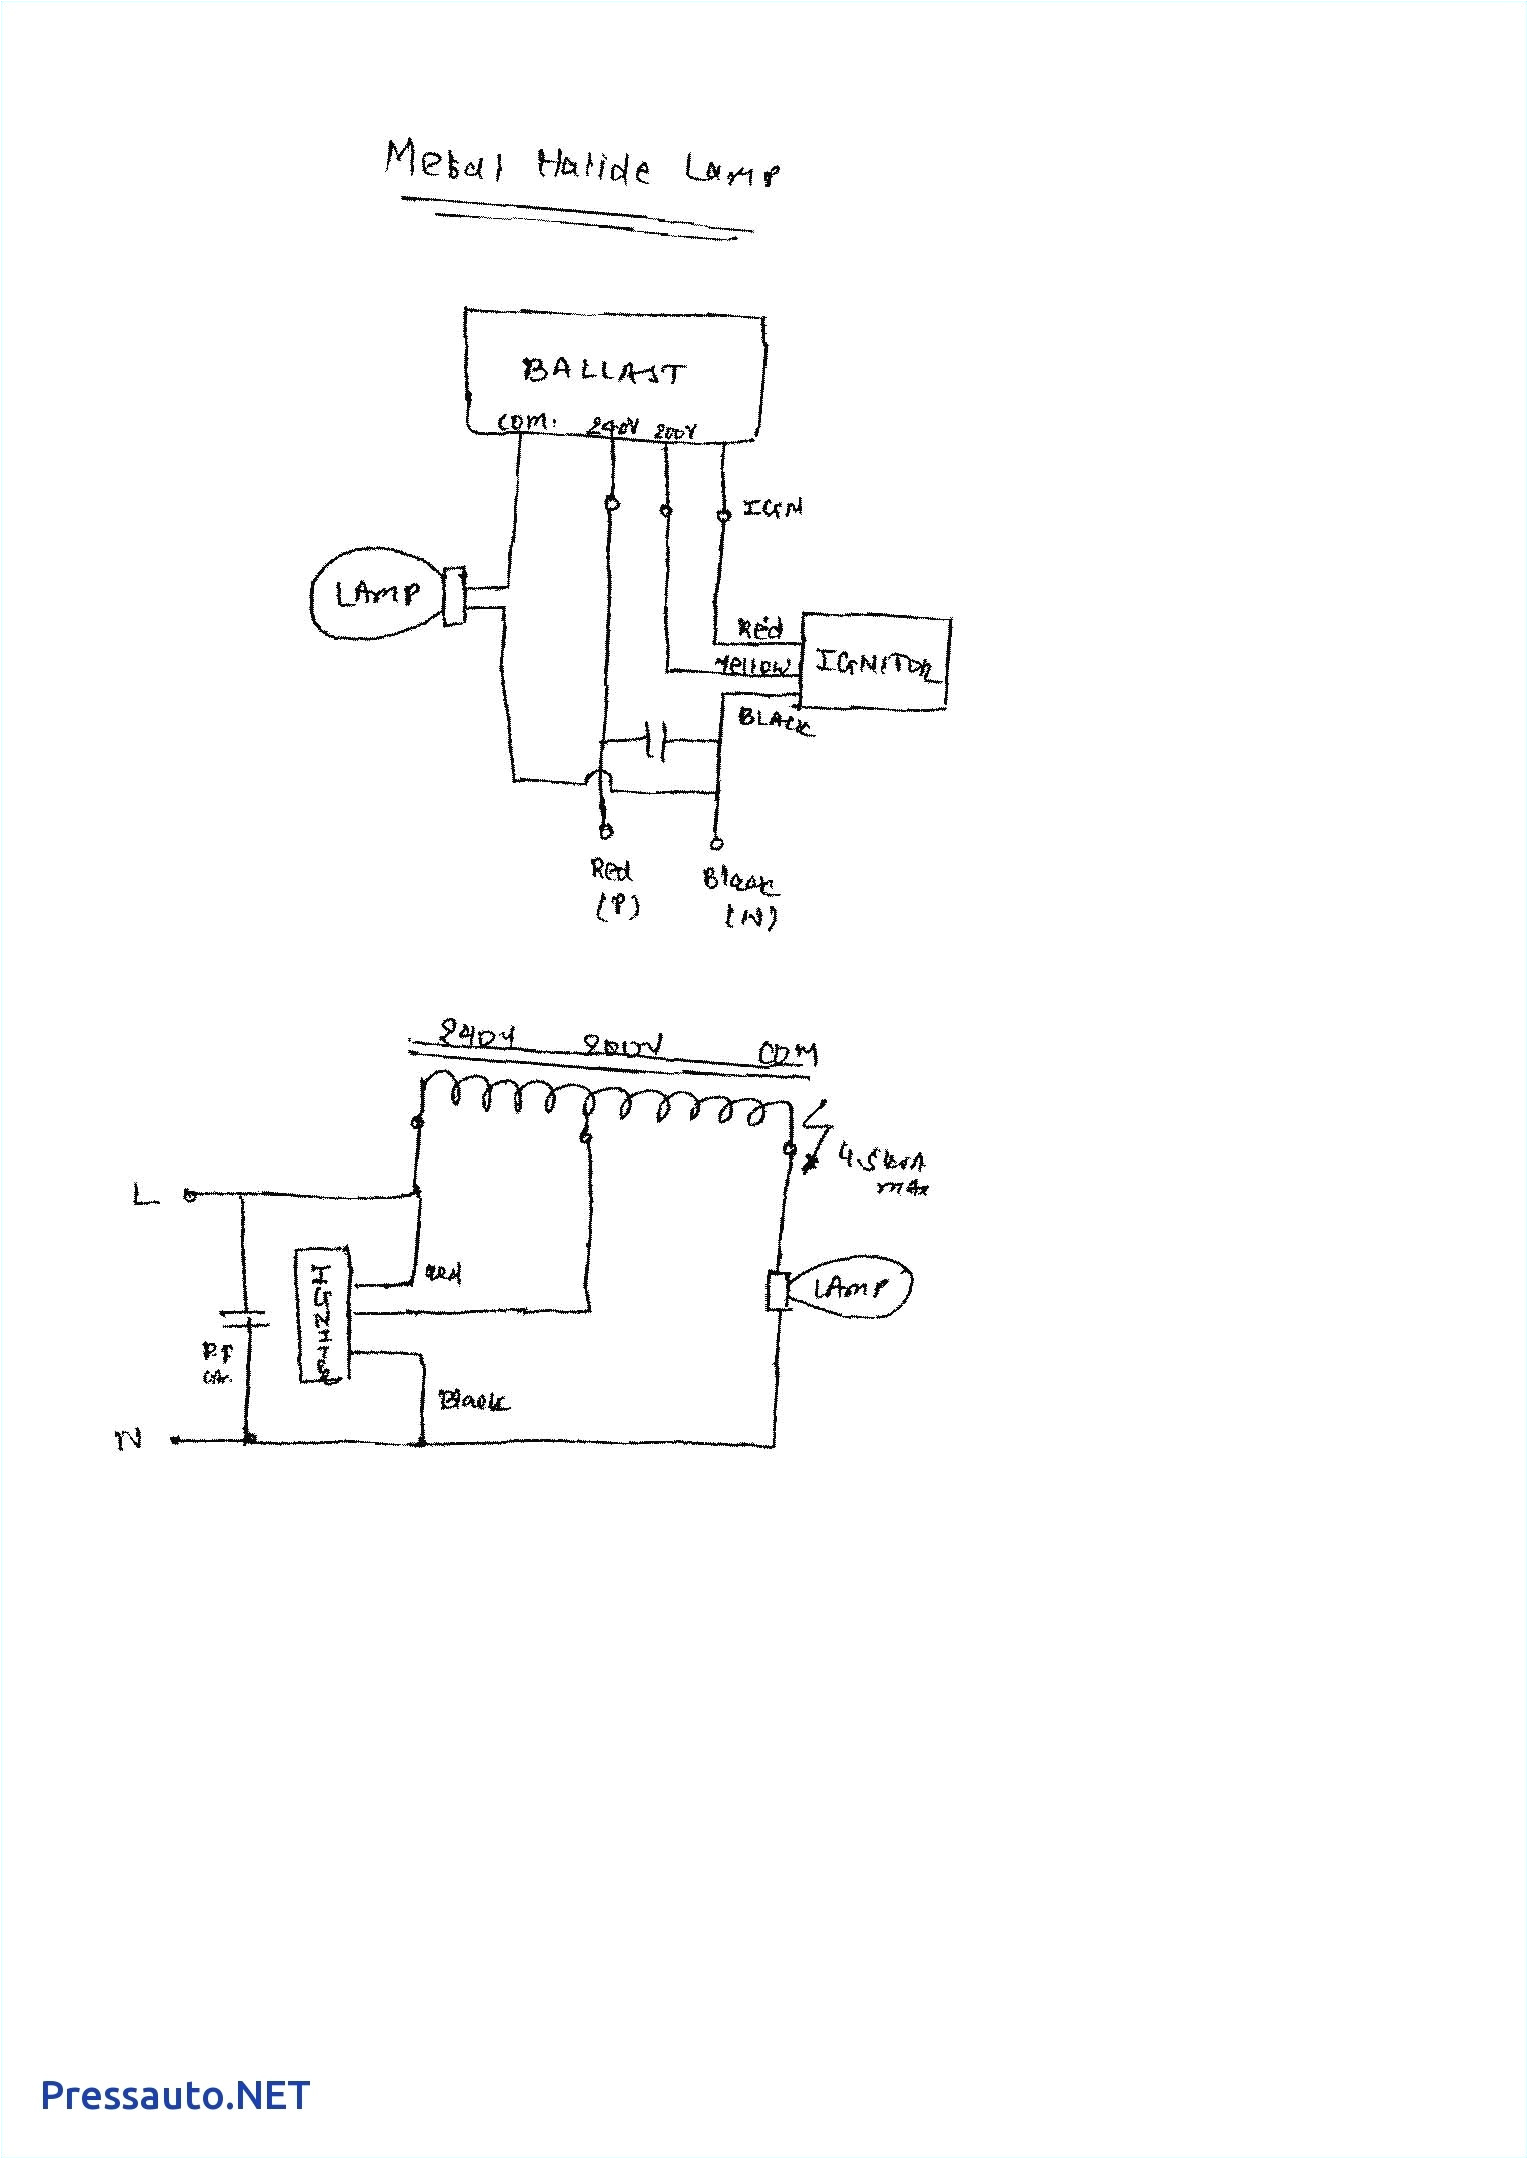 advance ballast wiring diagram wiring diagram centre advance t8 ballast wiring diagram